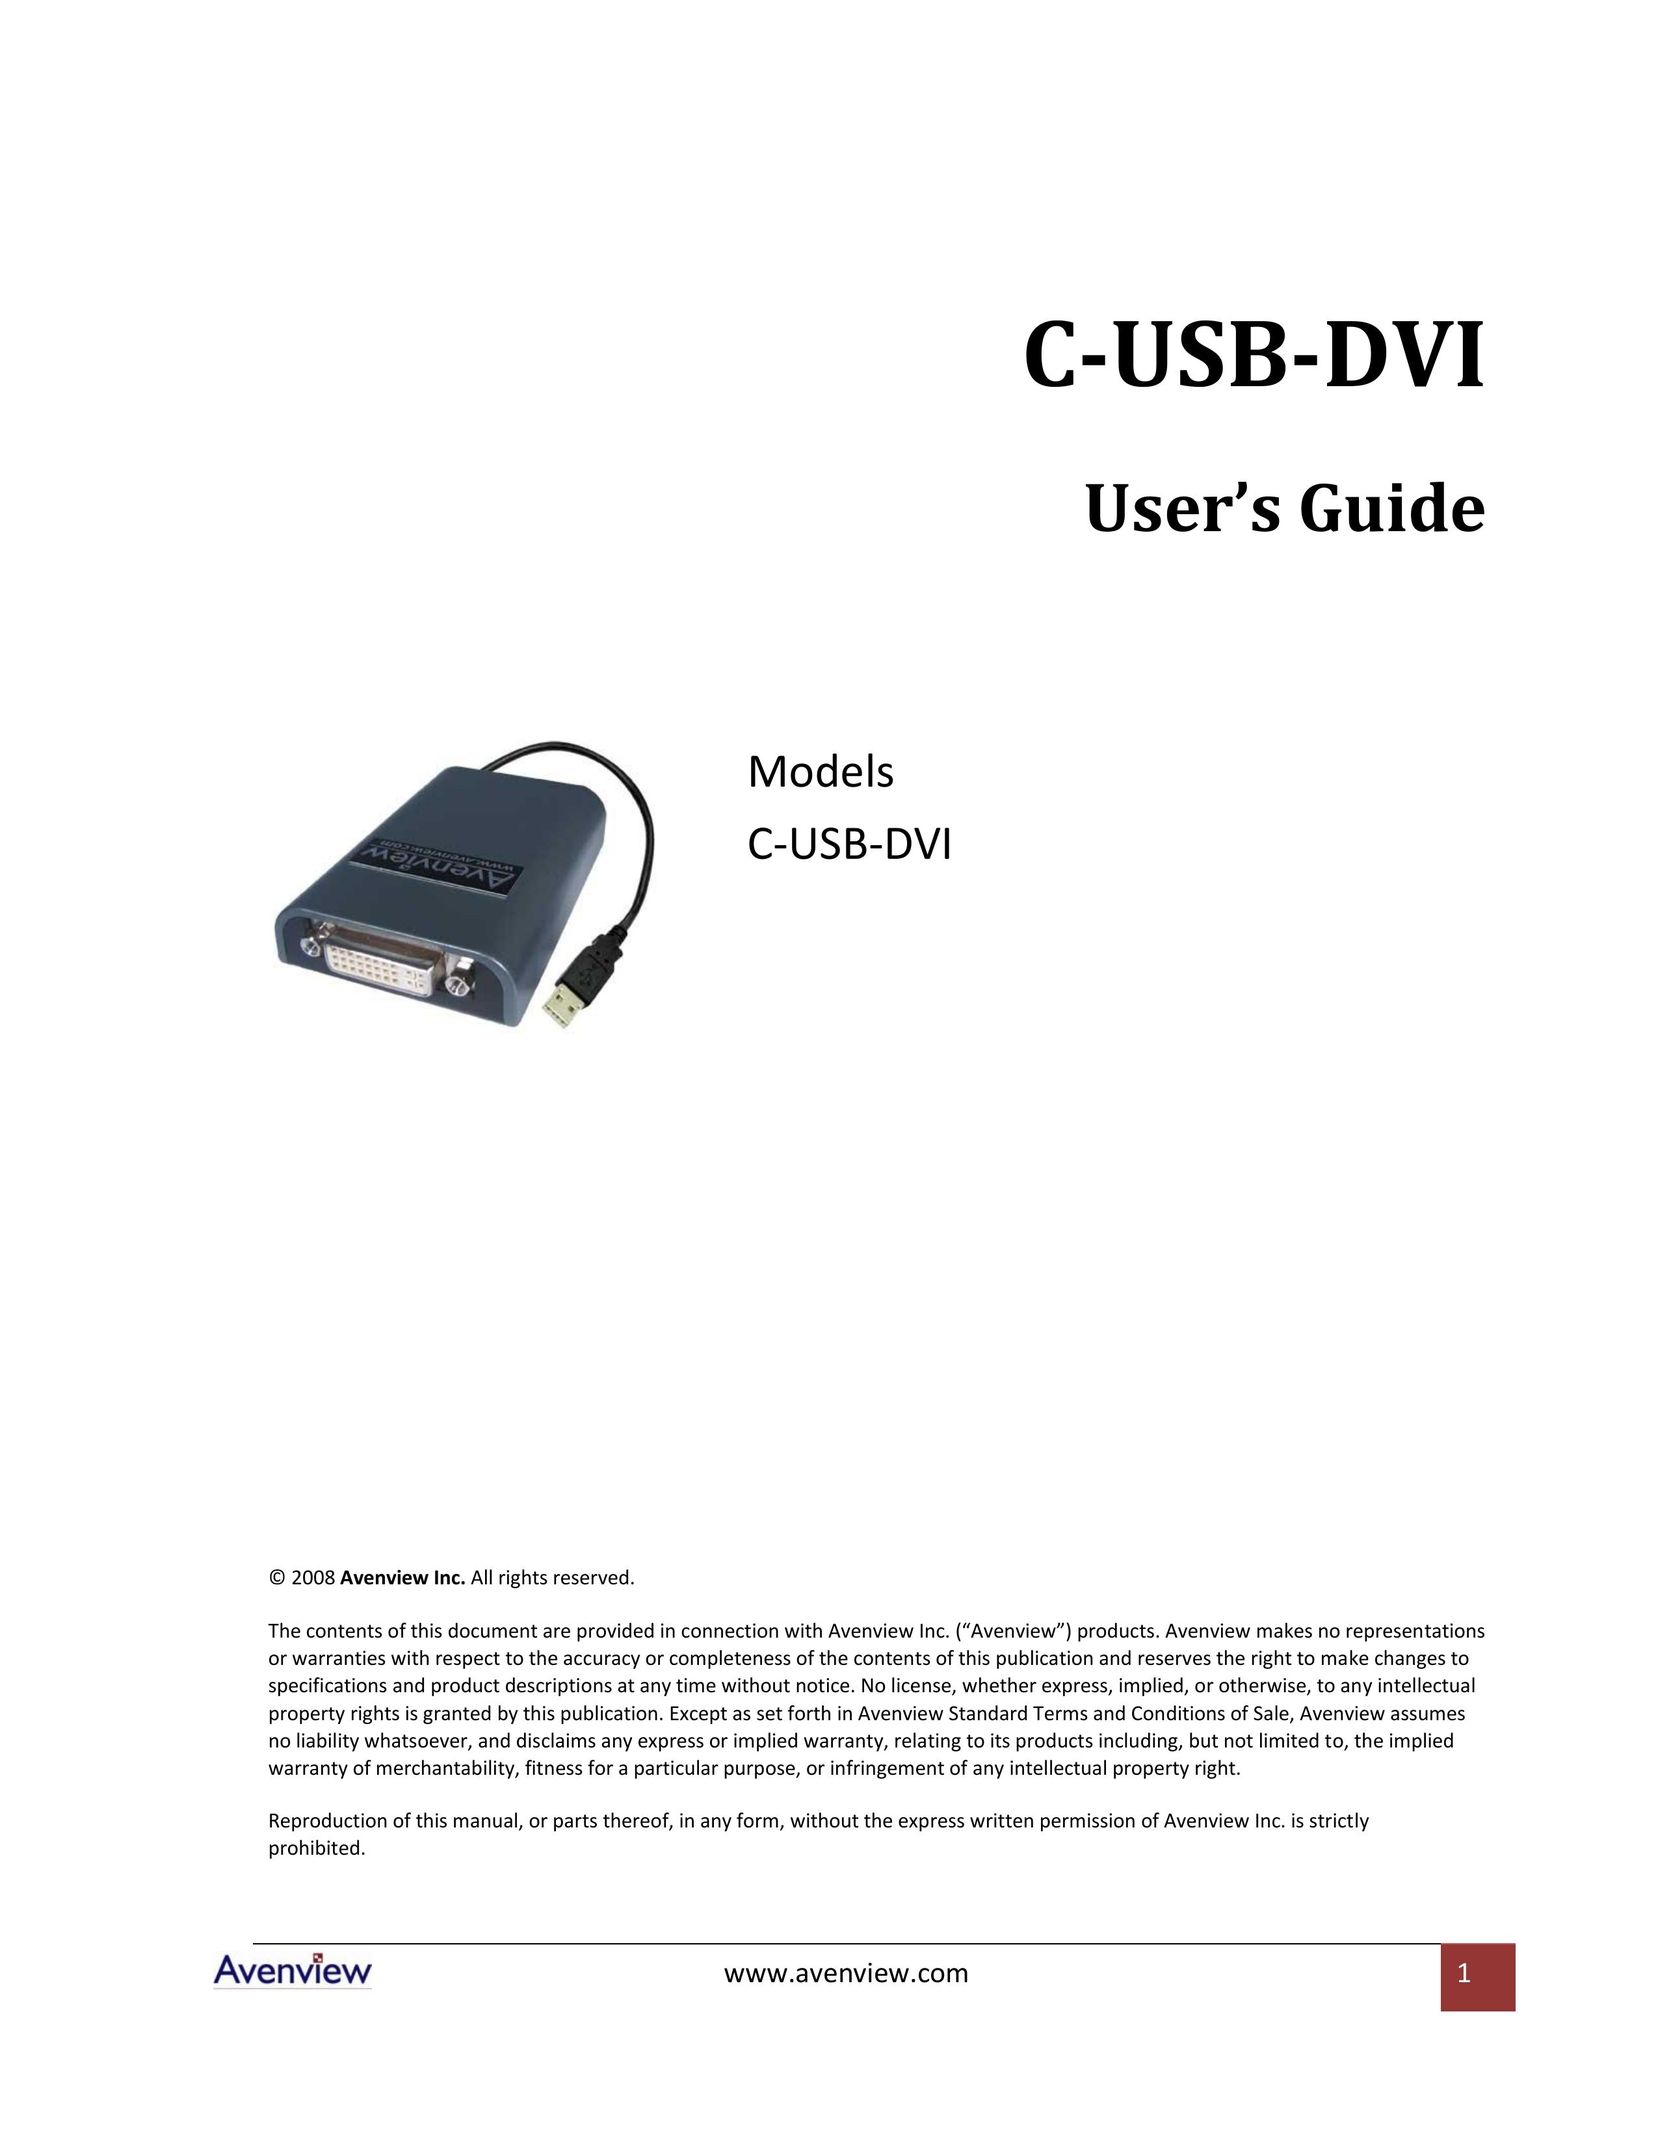 Avenview C-USB-DVI Network Card User Manual